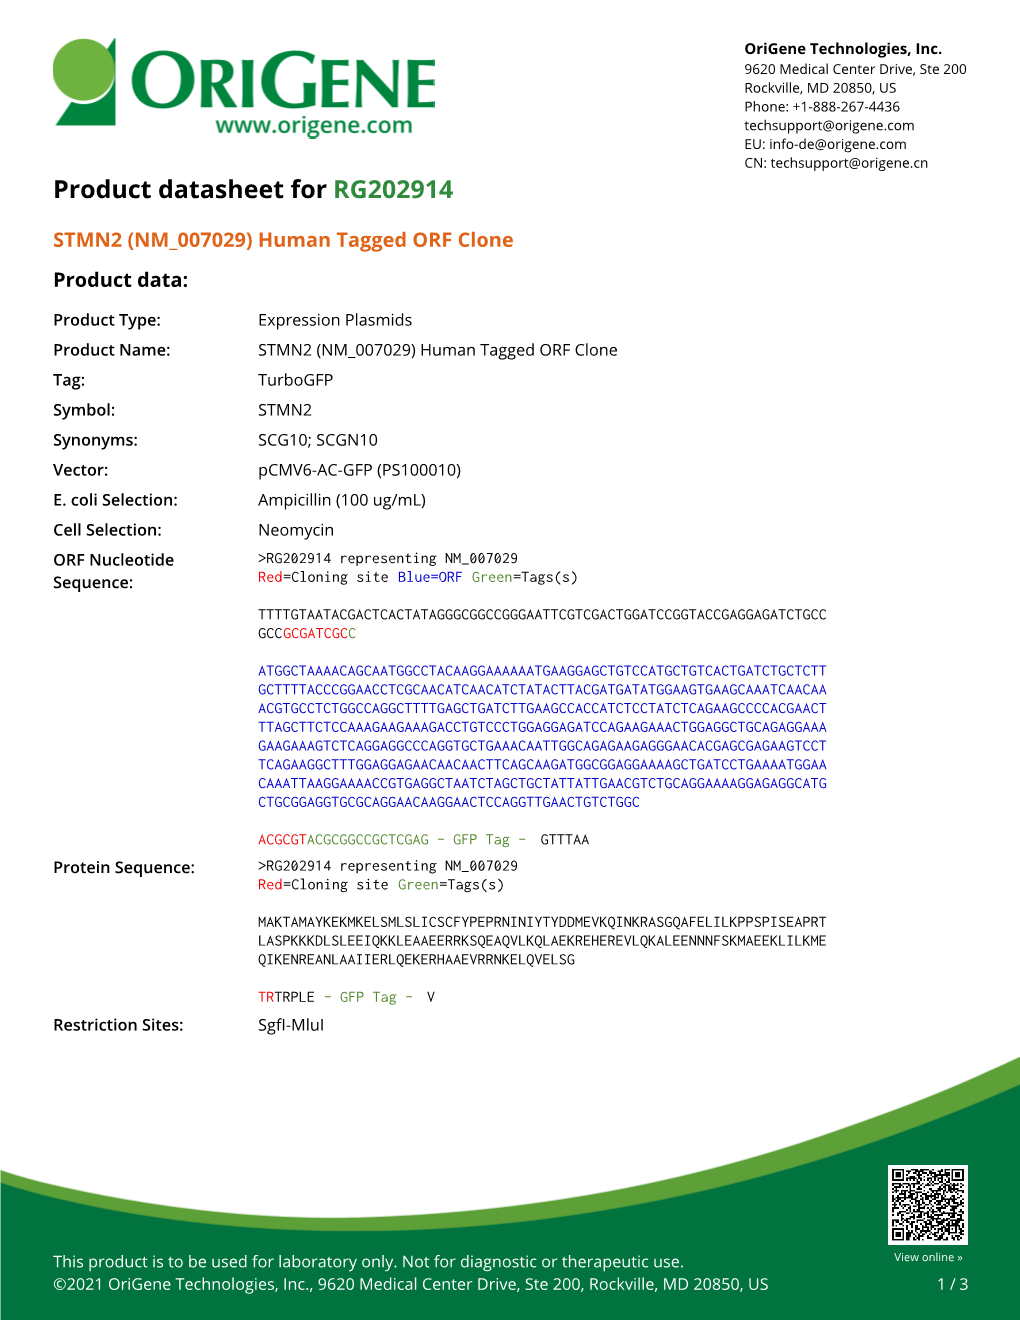 STMN2 (NM 007029) Human Tagged ORF Clone – RG202914 | Origene